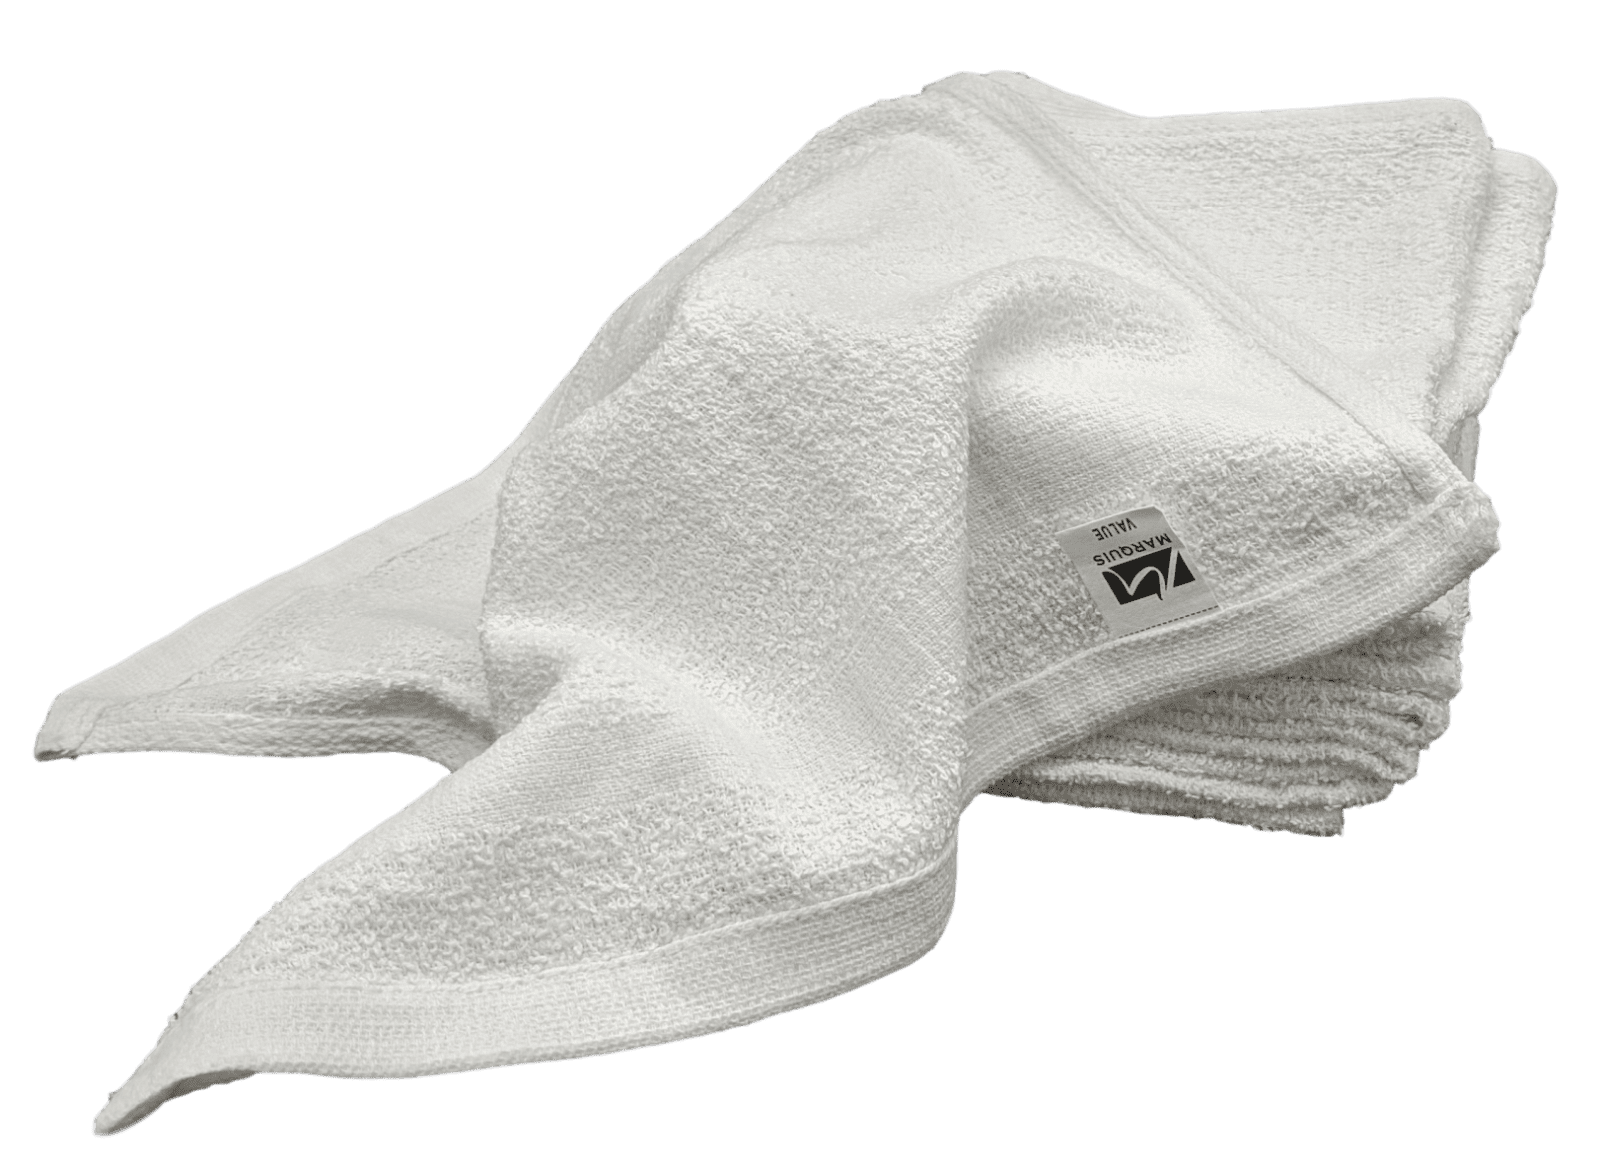 24 New WynDry Sobel Westex Washcloths white 100% cotton 11X10hotel